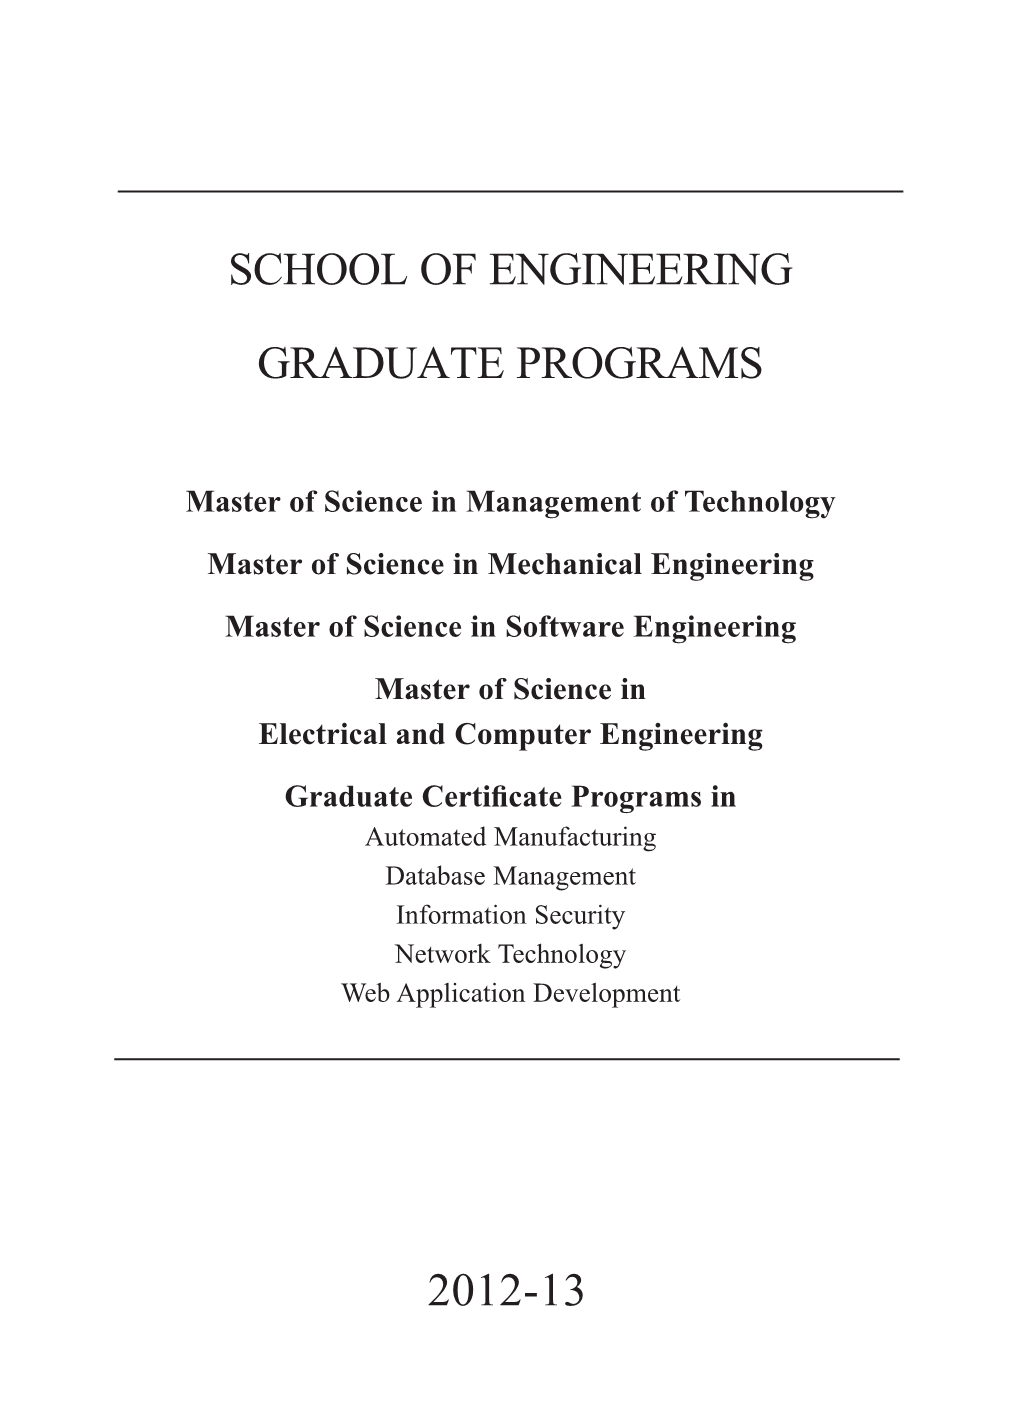 School of Engineering Graduate Programs